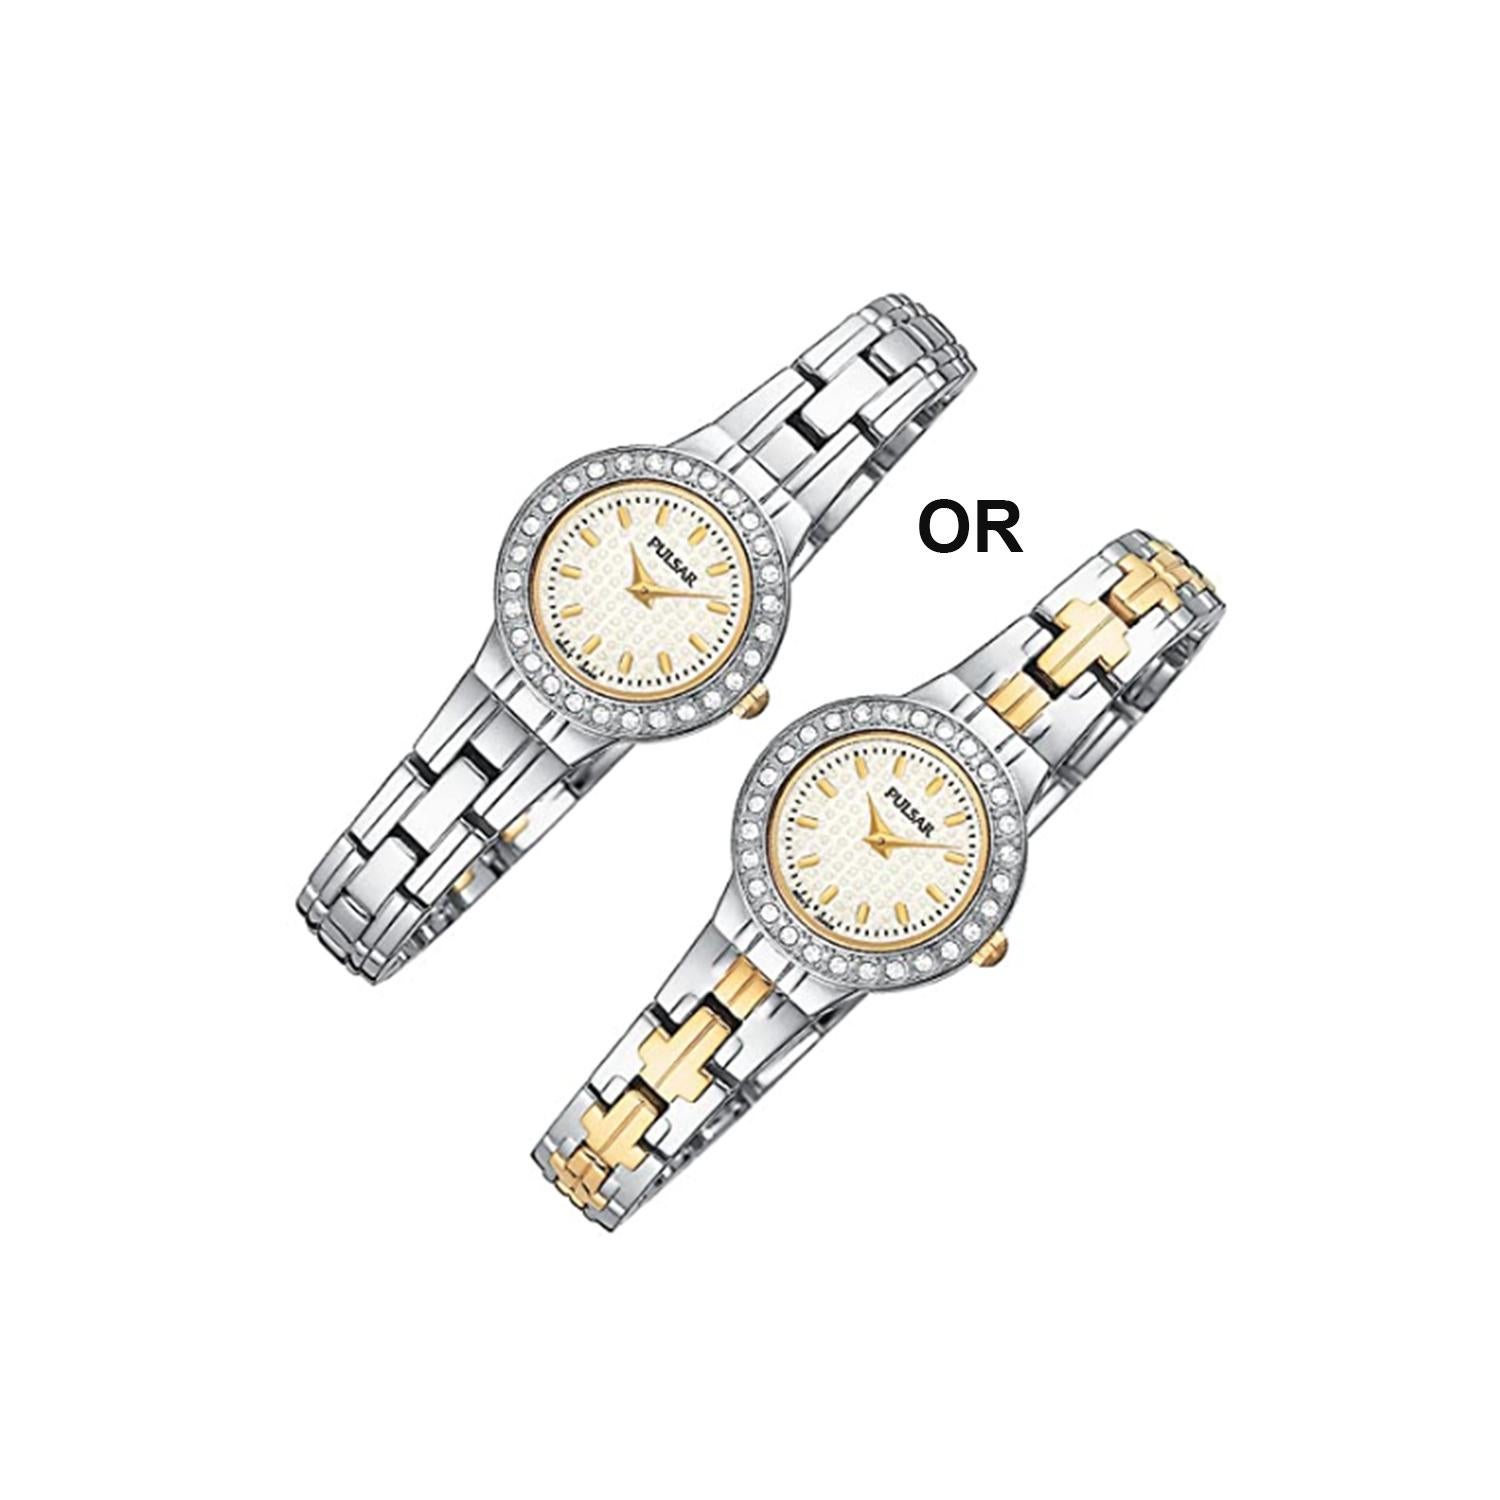 Pulsar Two Tone Stainless Steel White Sparkling Dial Quartz Women's Watch PEGC55 1